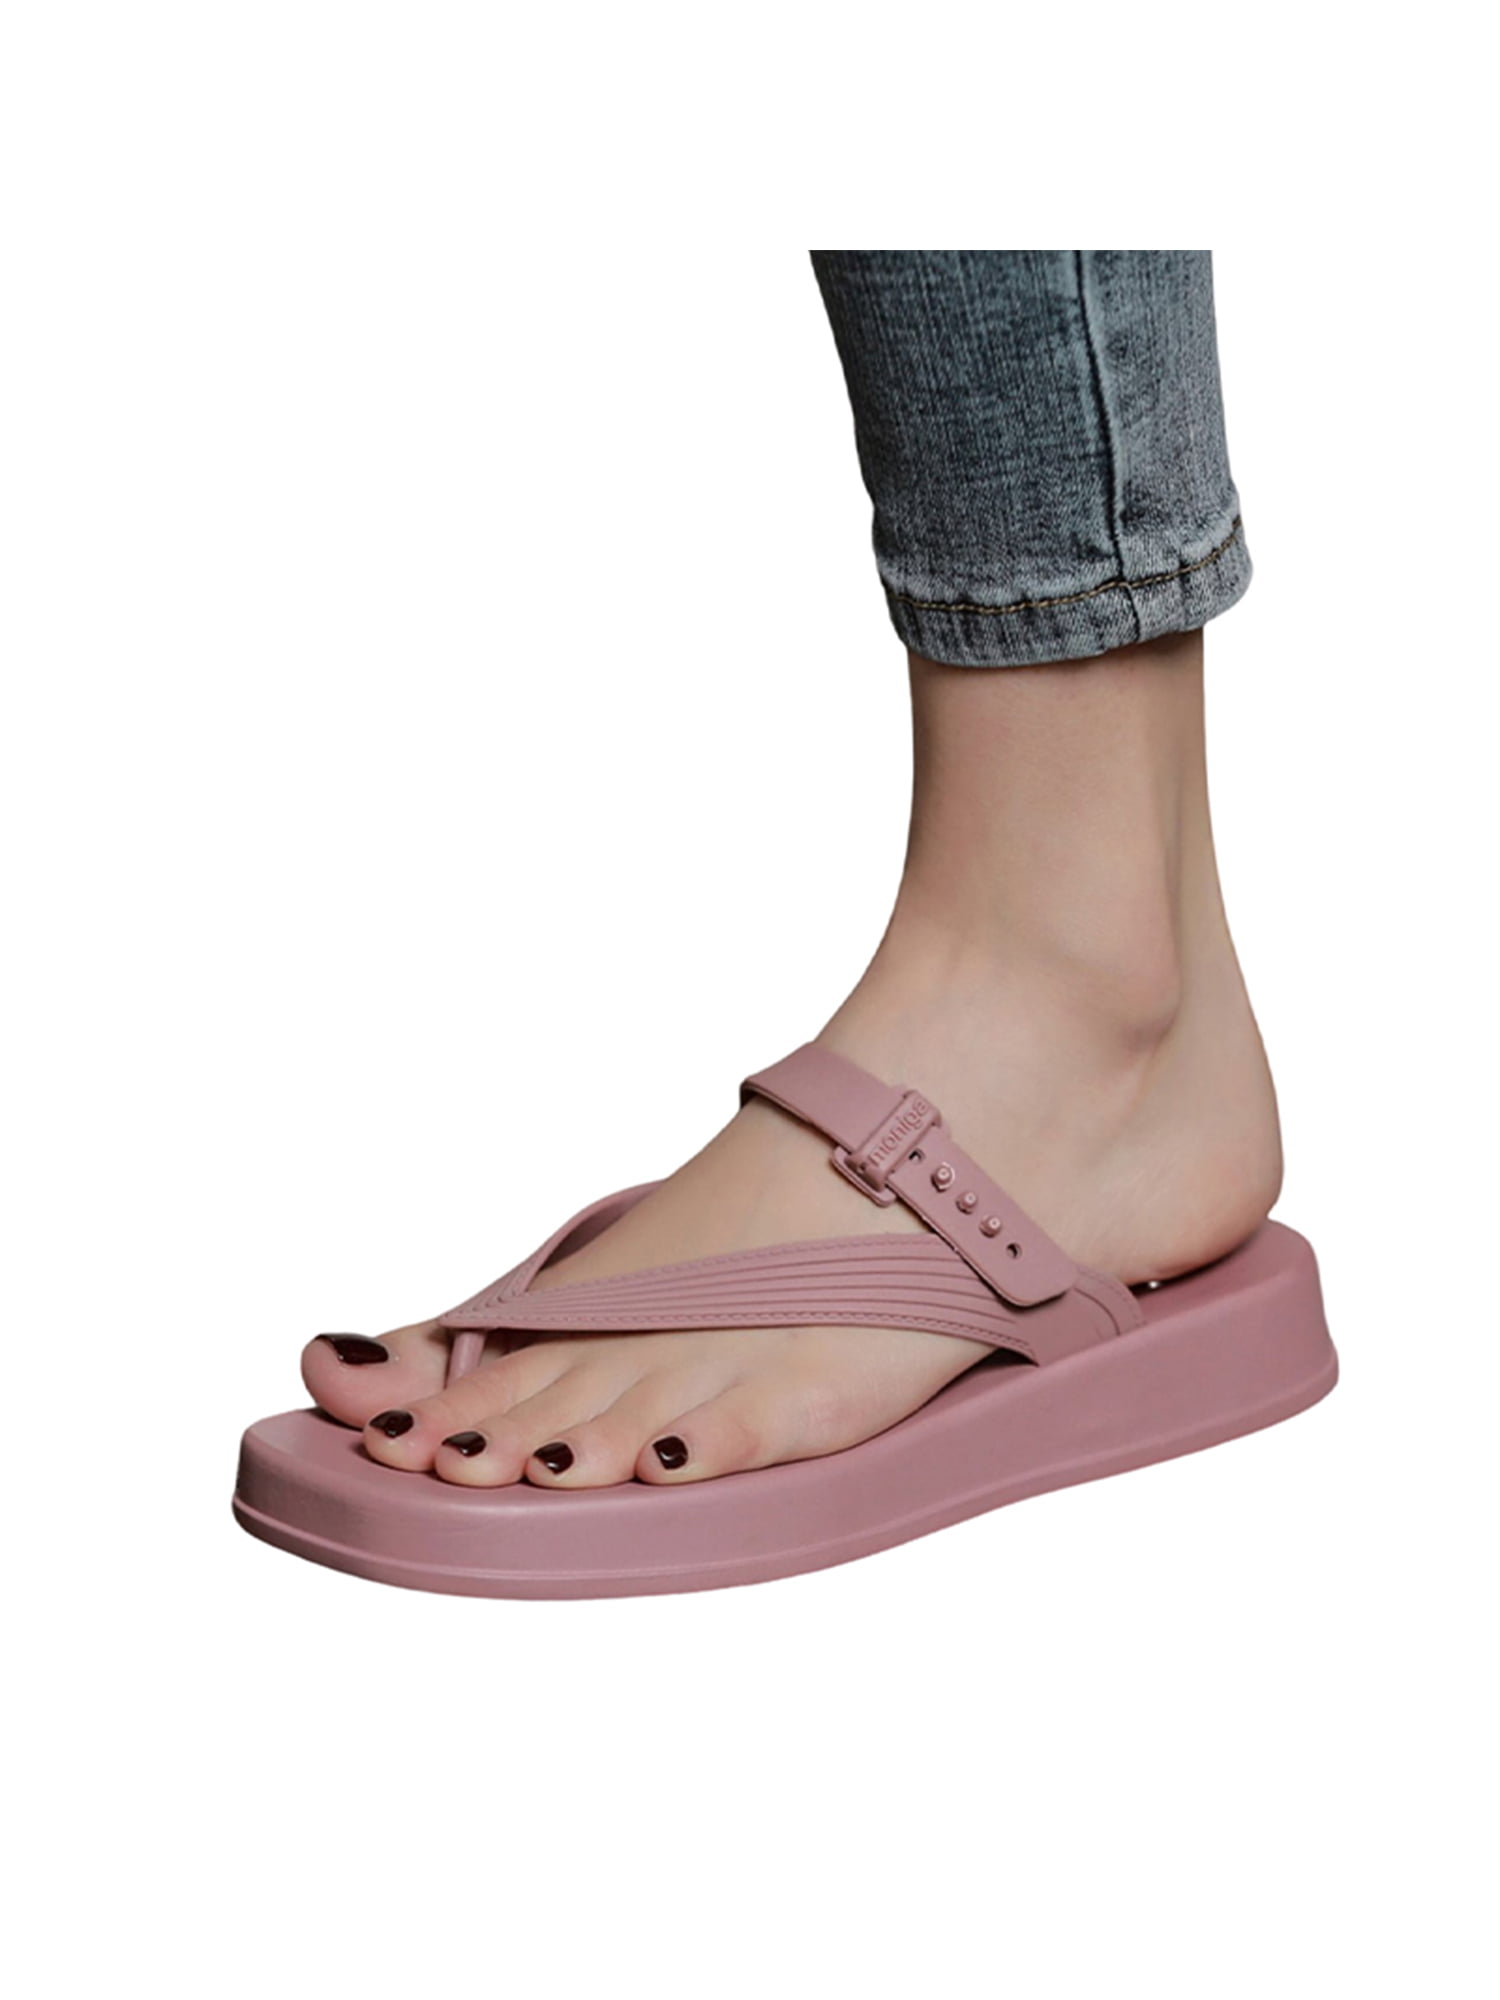 Eloshman Ladies Flip Flops Beach Slide Sandal Slip On Thong Sandals Summer  Casual Strap Buckle Shoes Lightweight Slides Milk Tea Color 5.5 